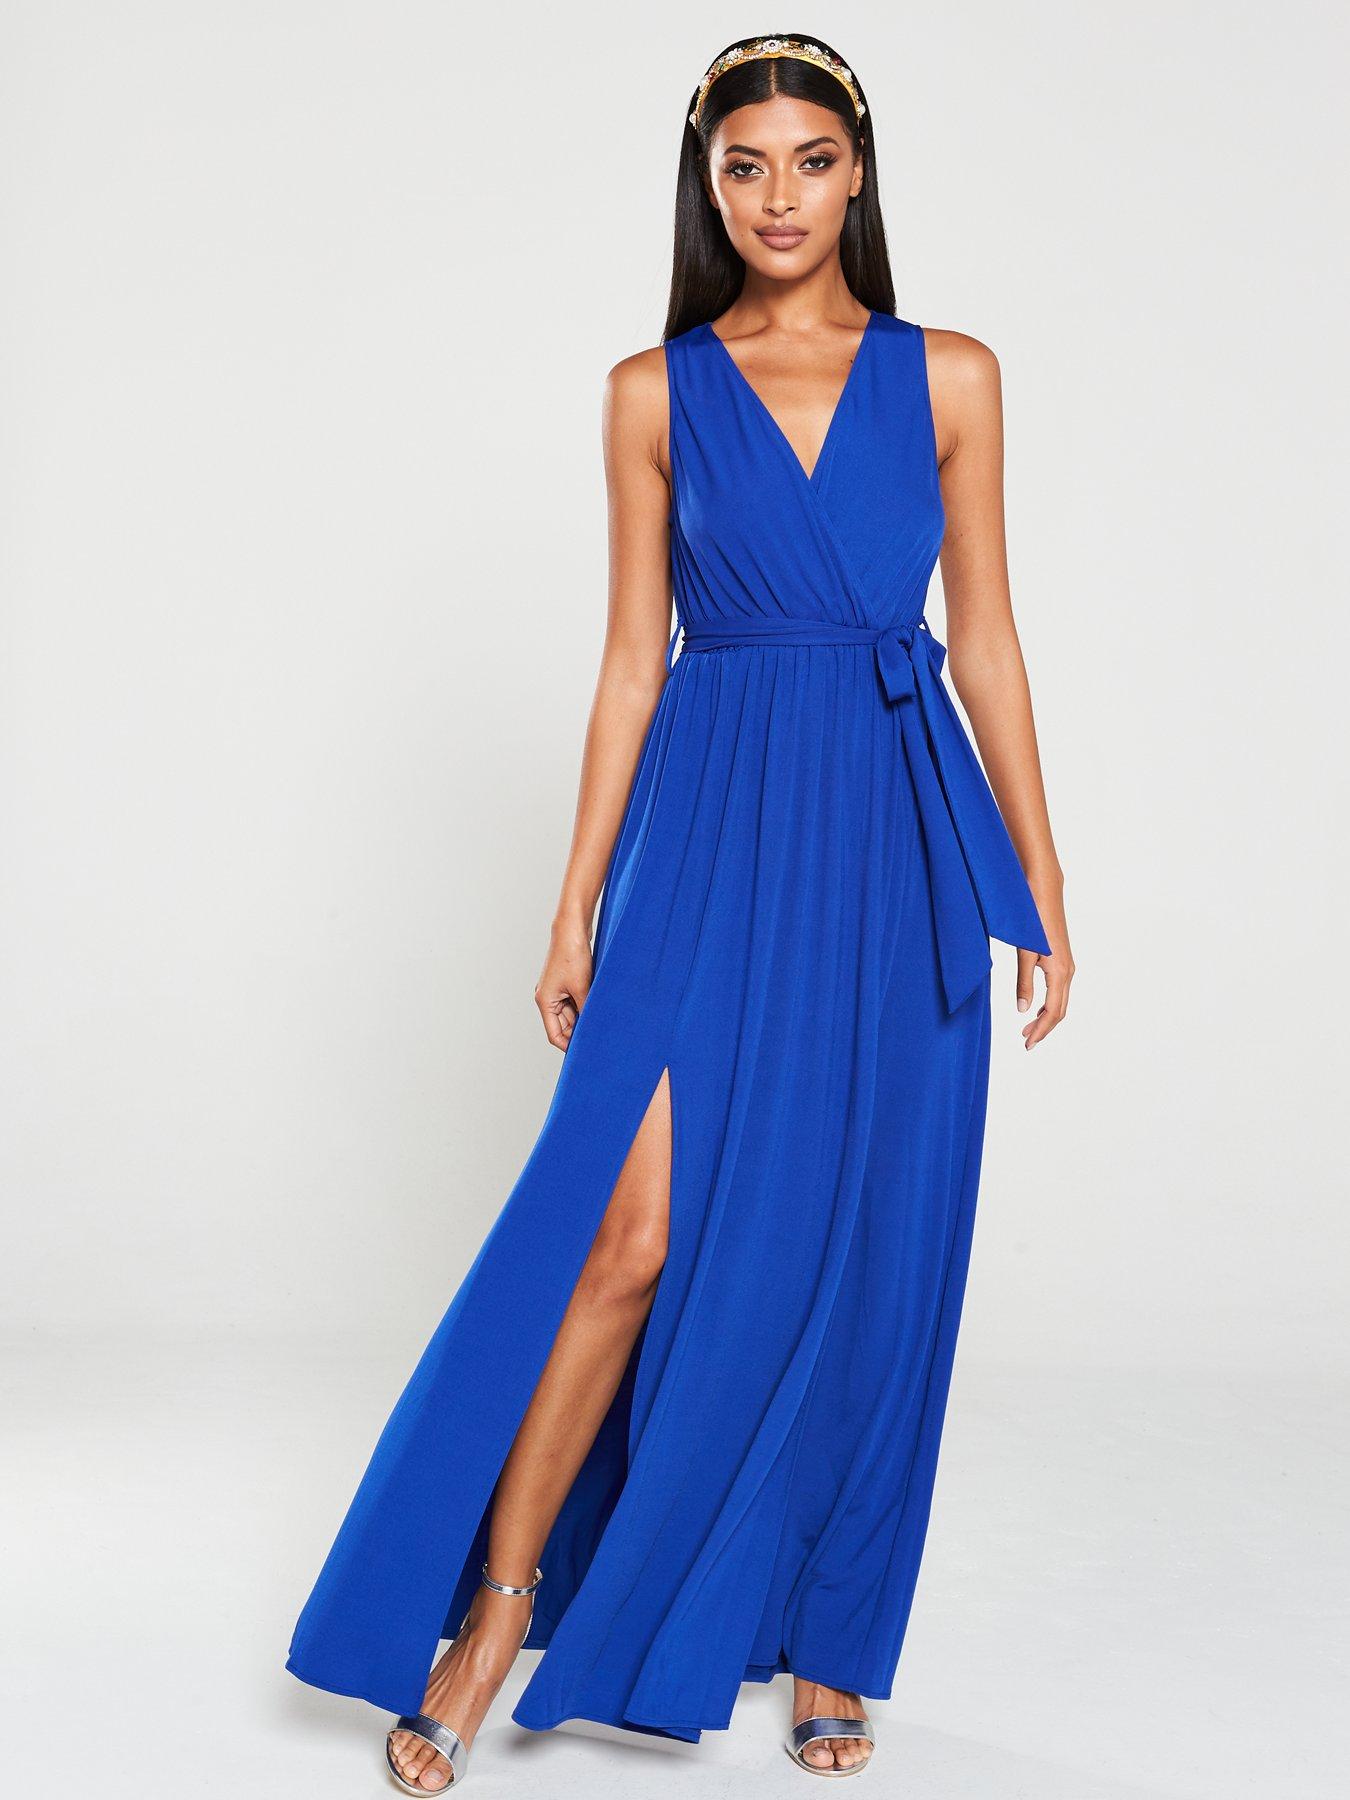 blue maxi dress uk